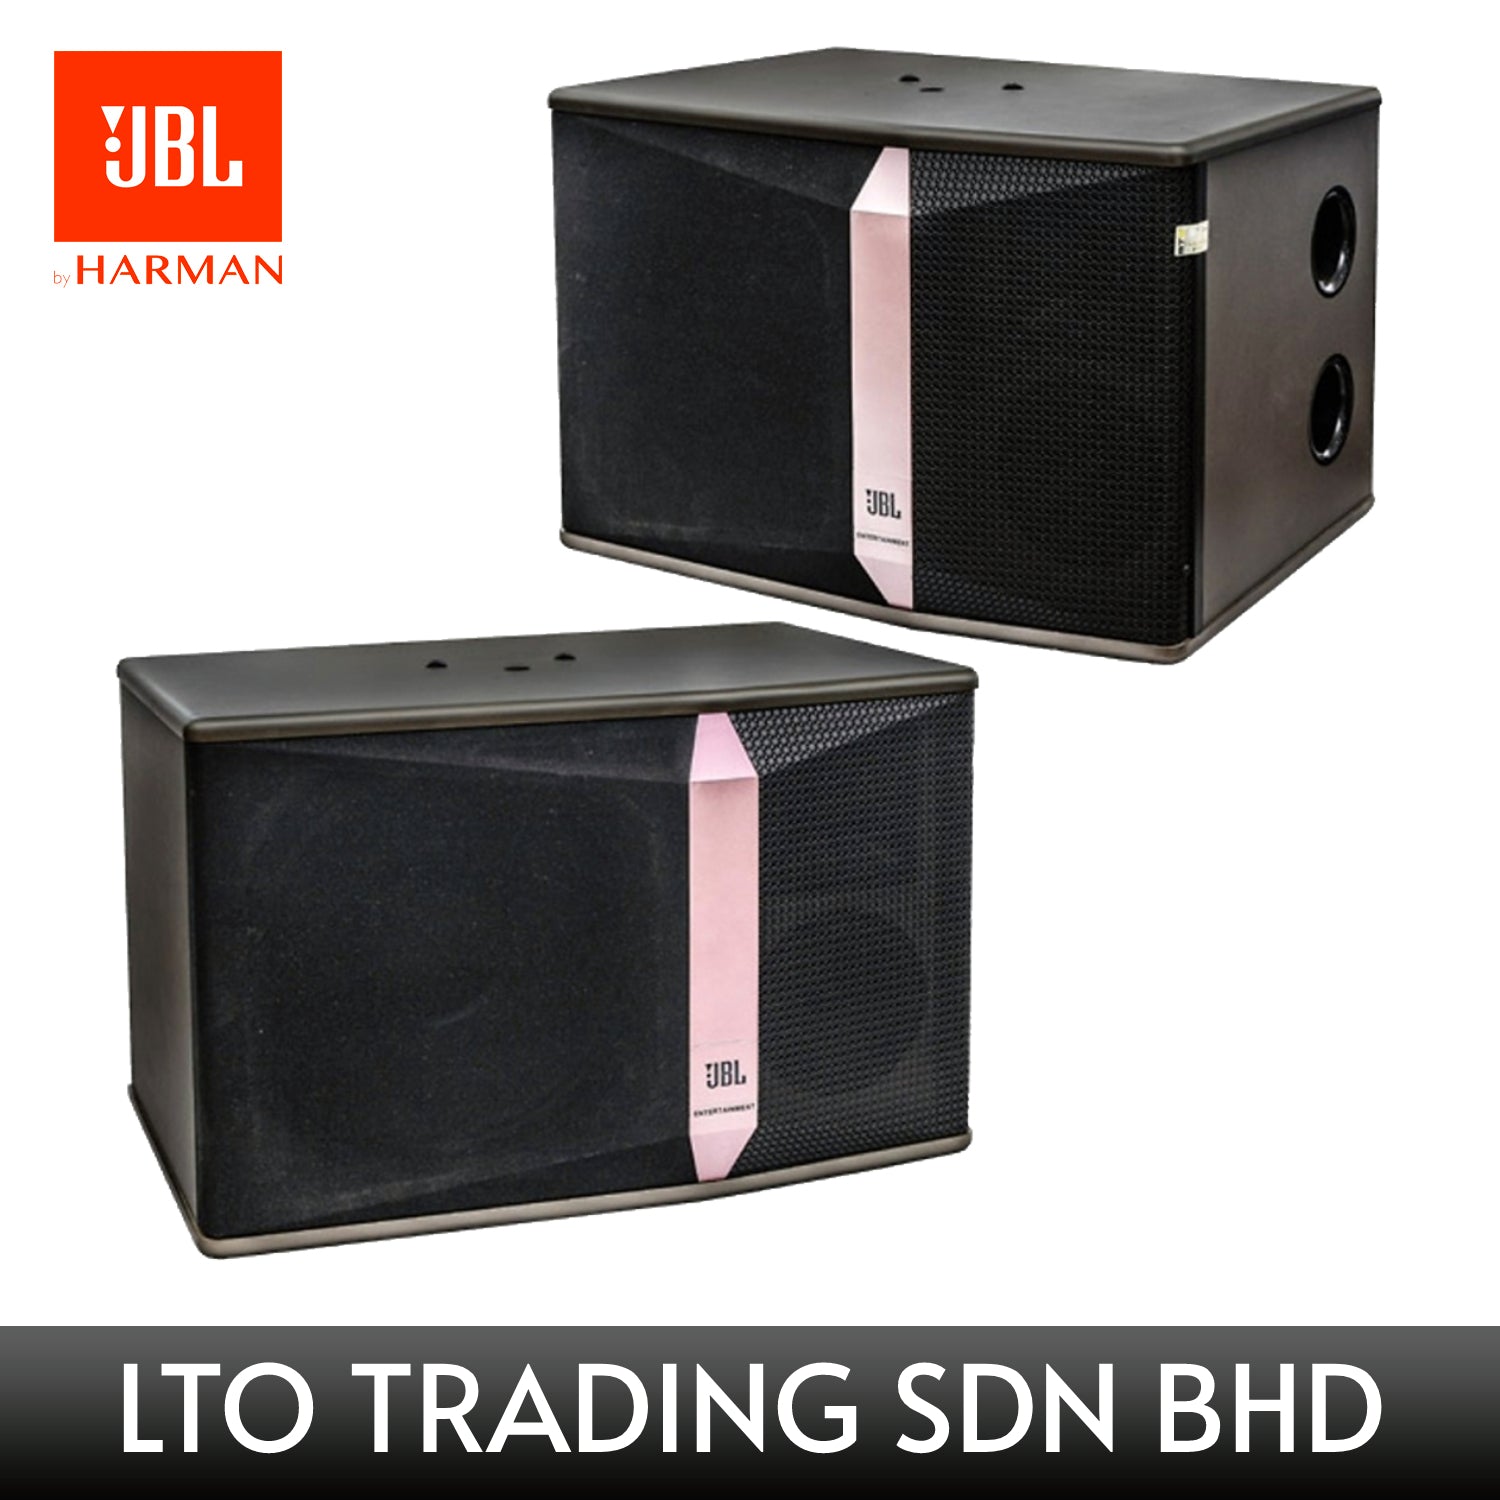 JBL Ki512 Karaoke Passive Speaker – PA SYSTEM MALAYSIA - Design